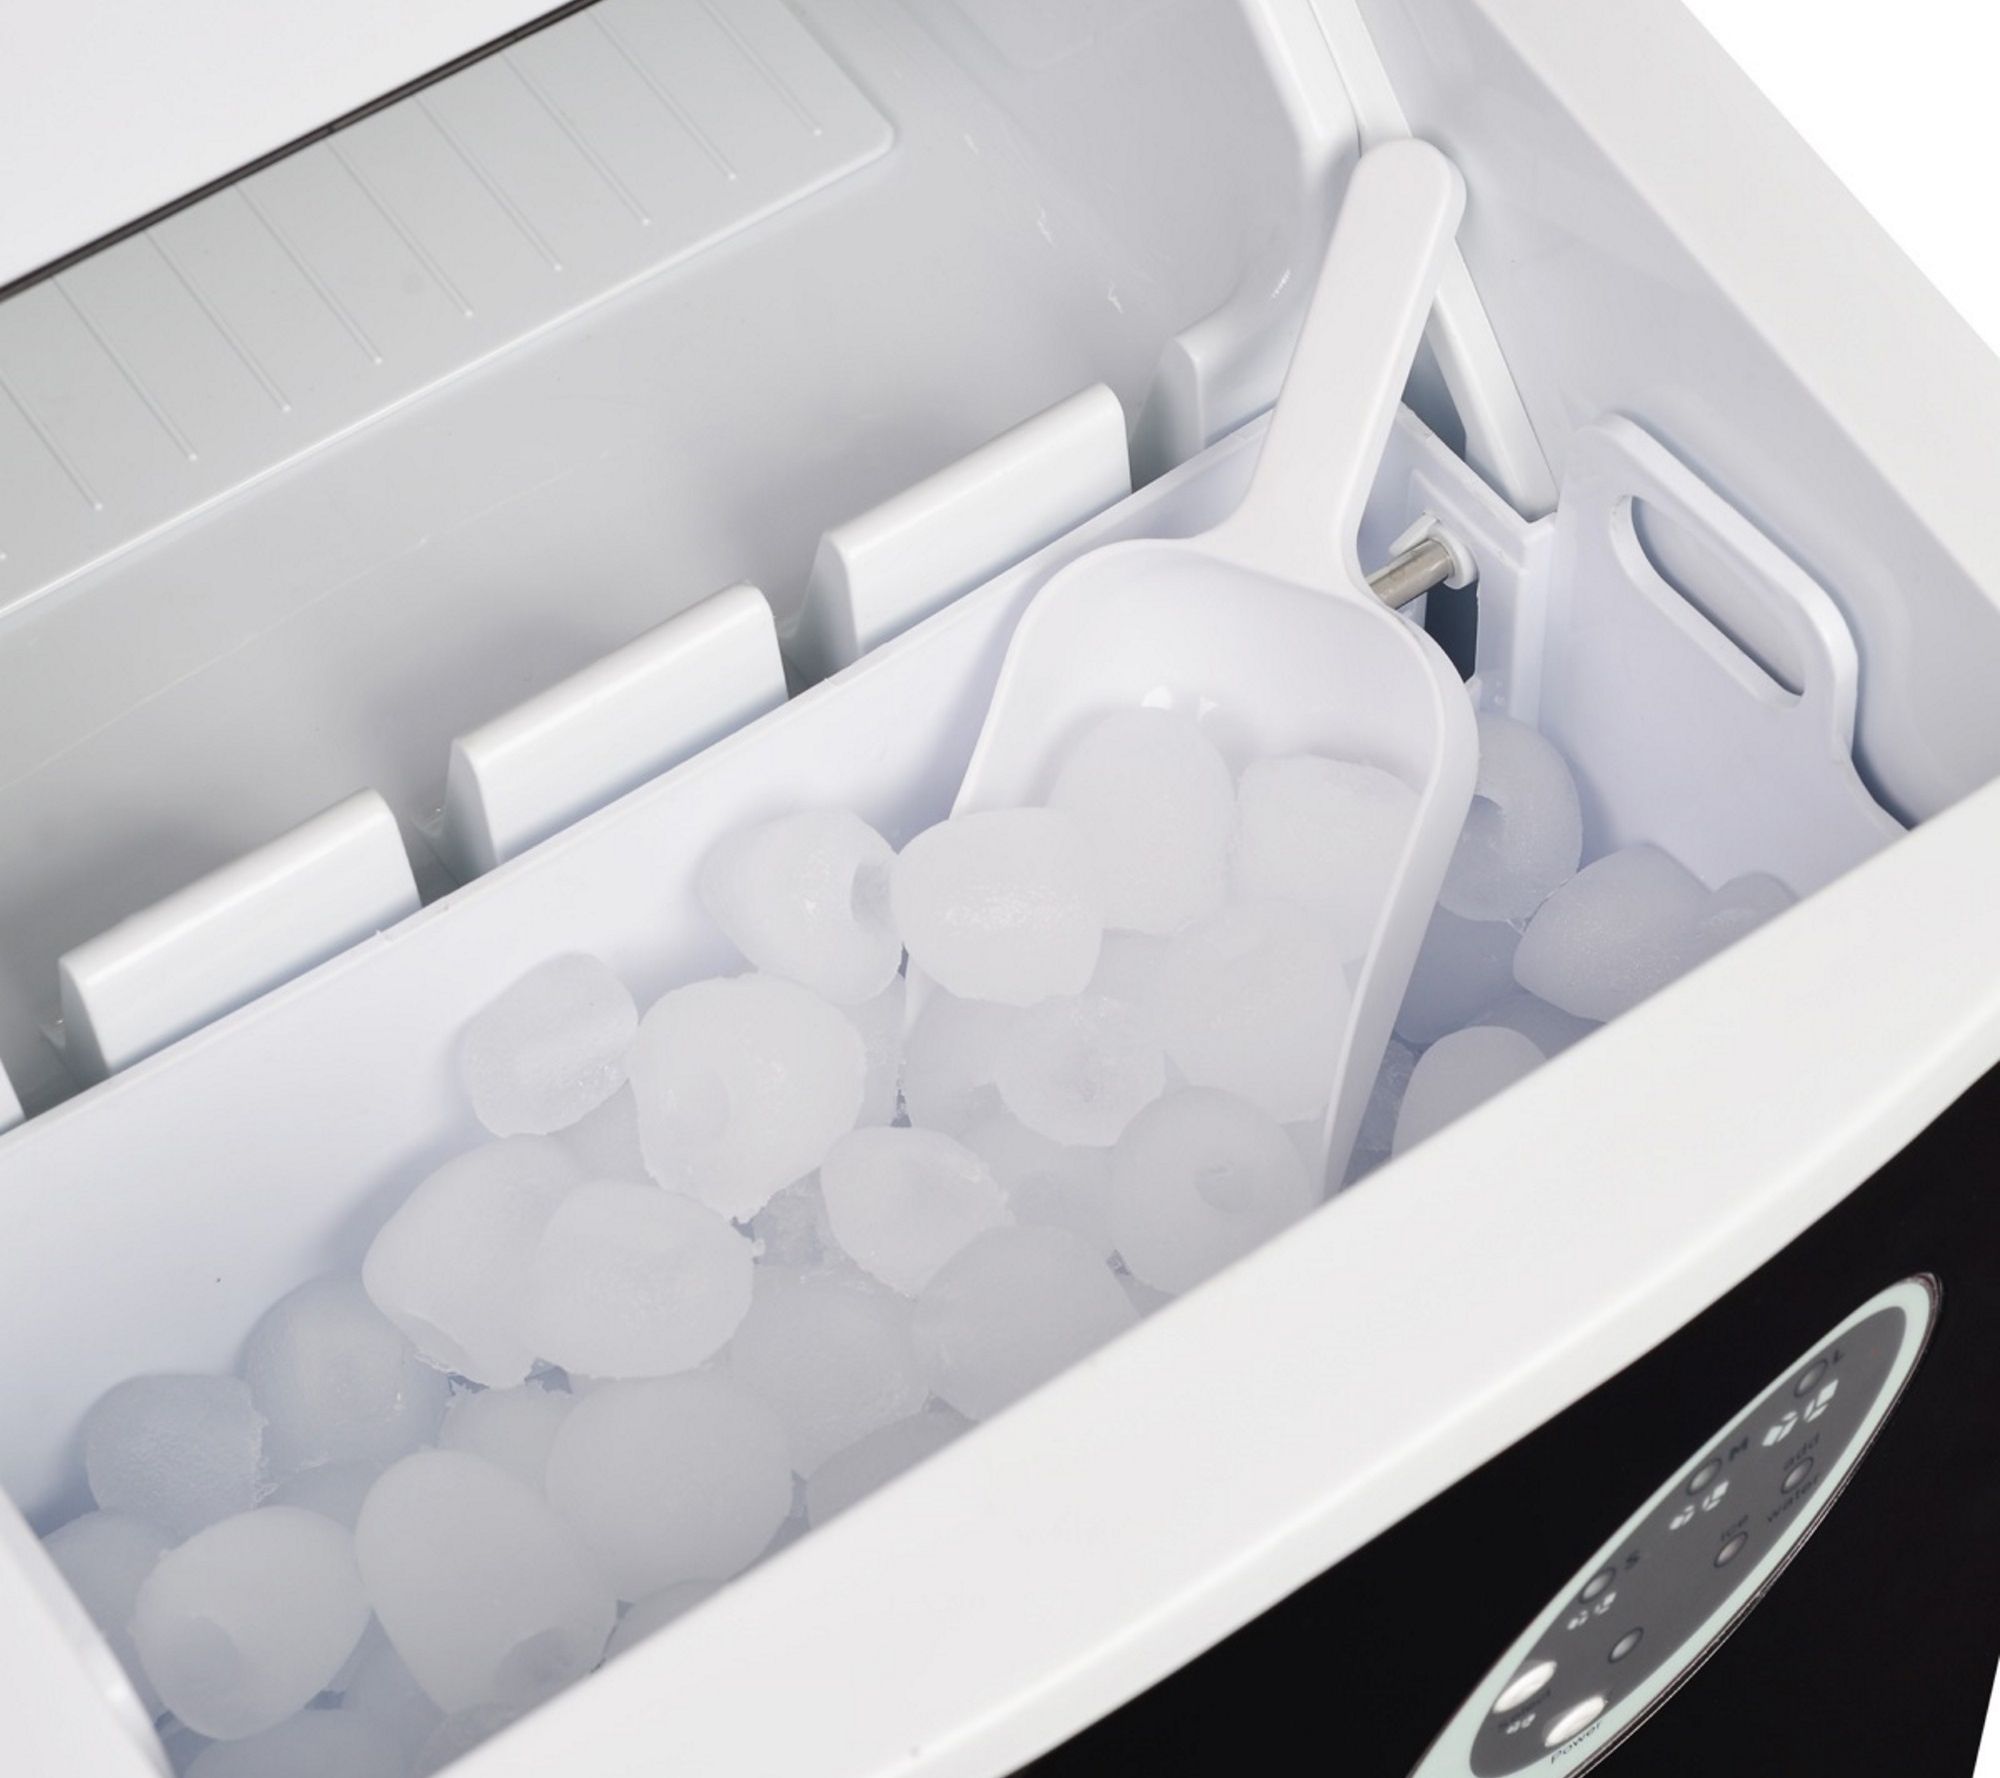 Iceman 26- lbs Countertop Nugget Ice Machine 